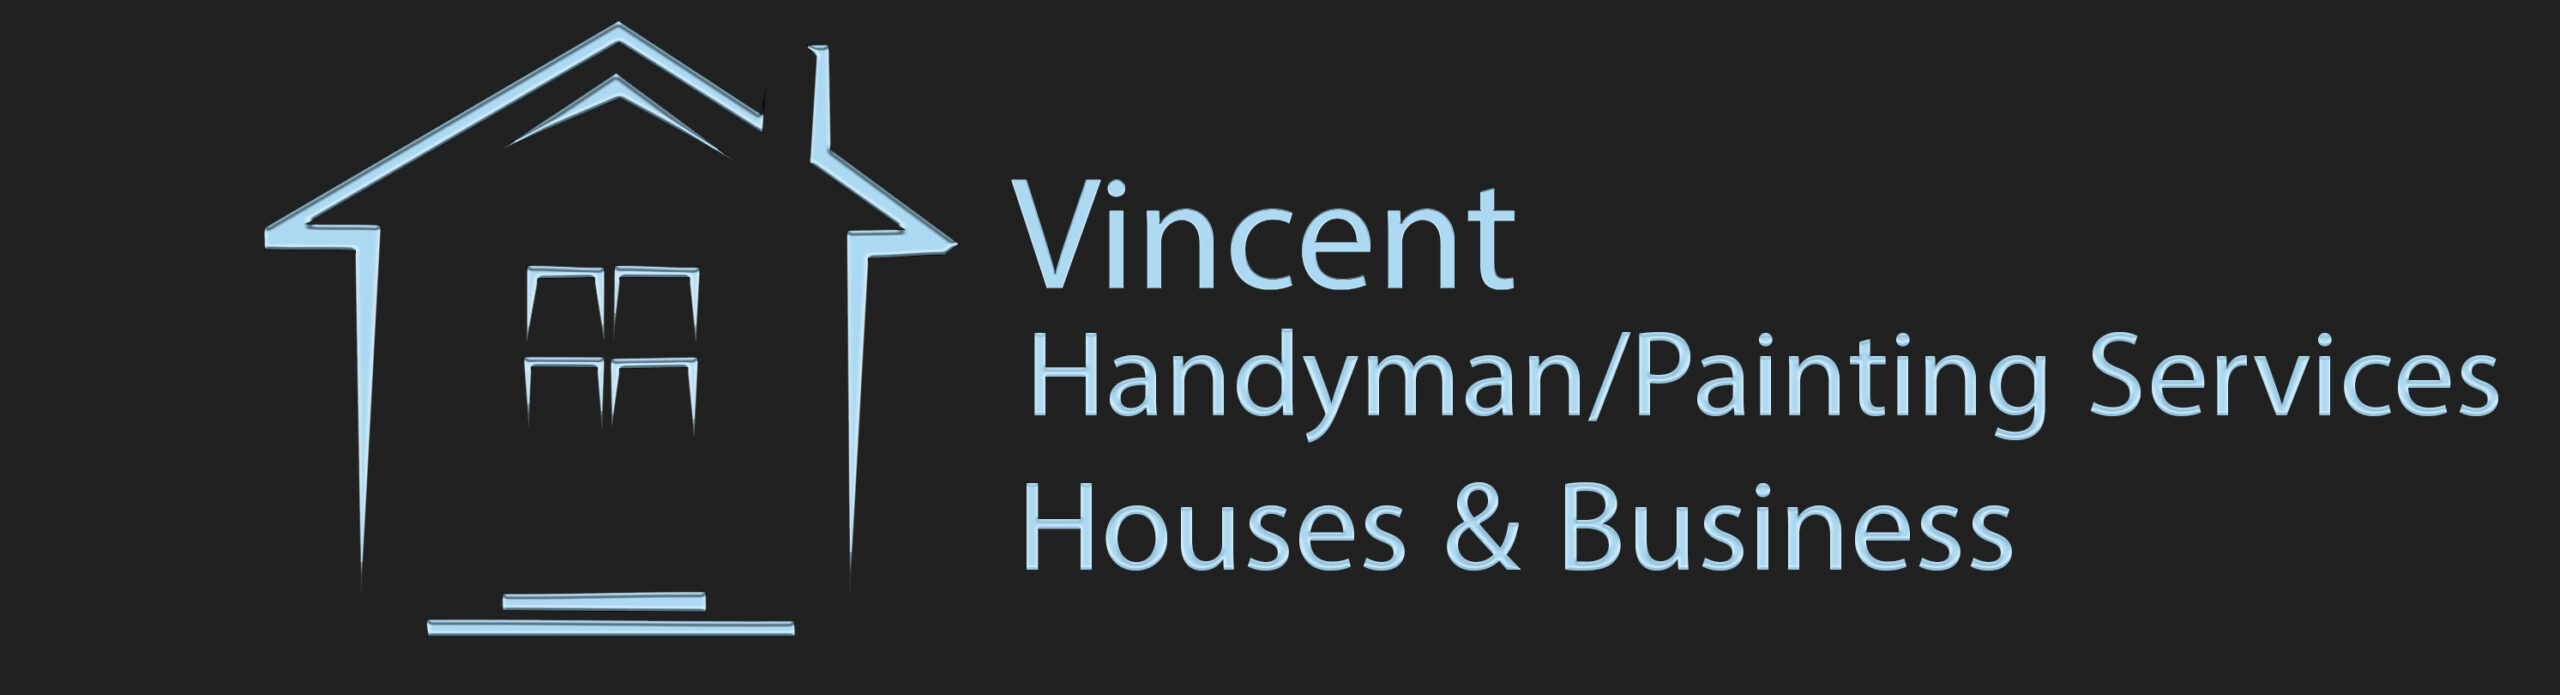 Vincent Handyman & Painting